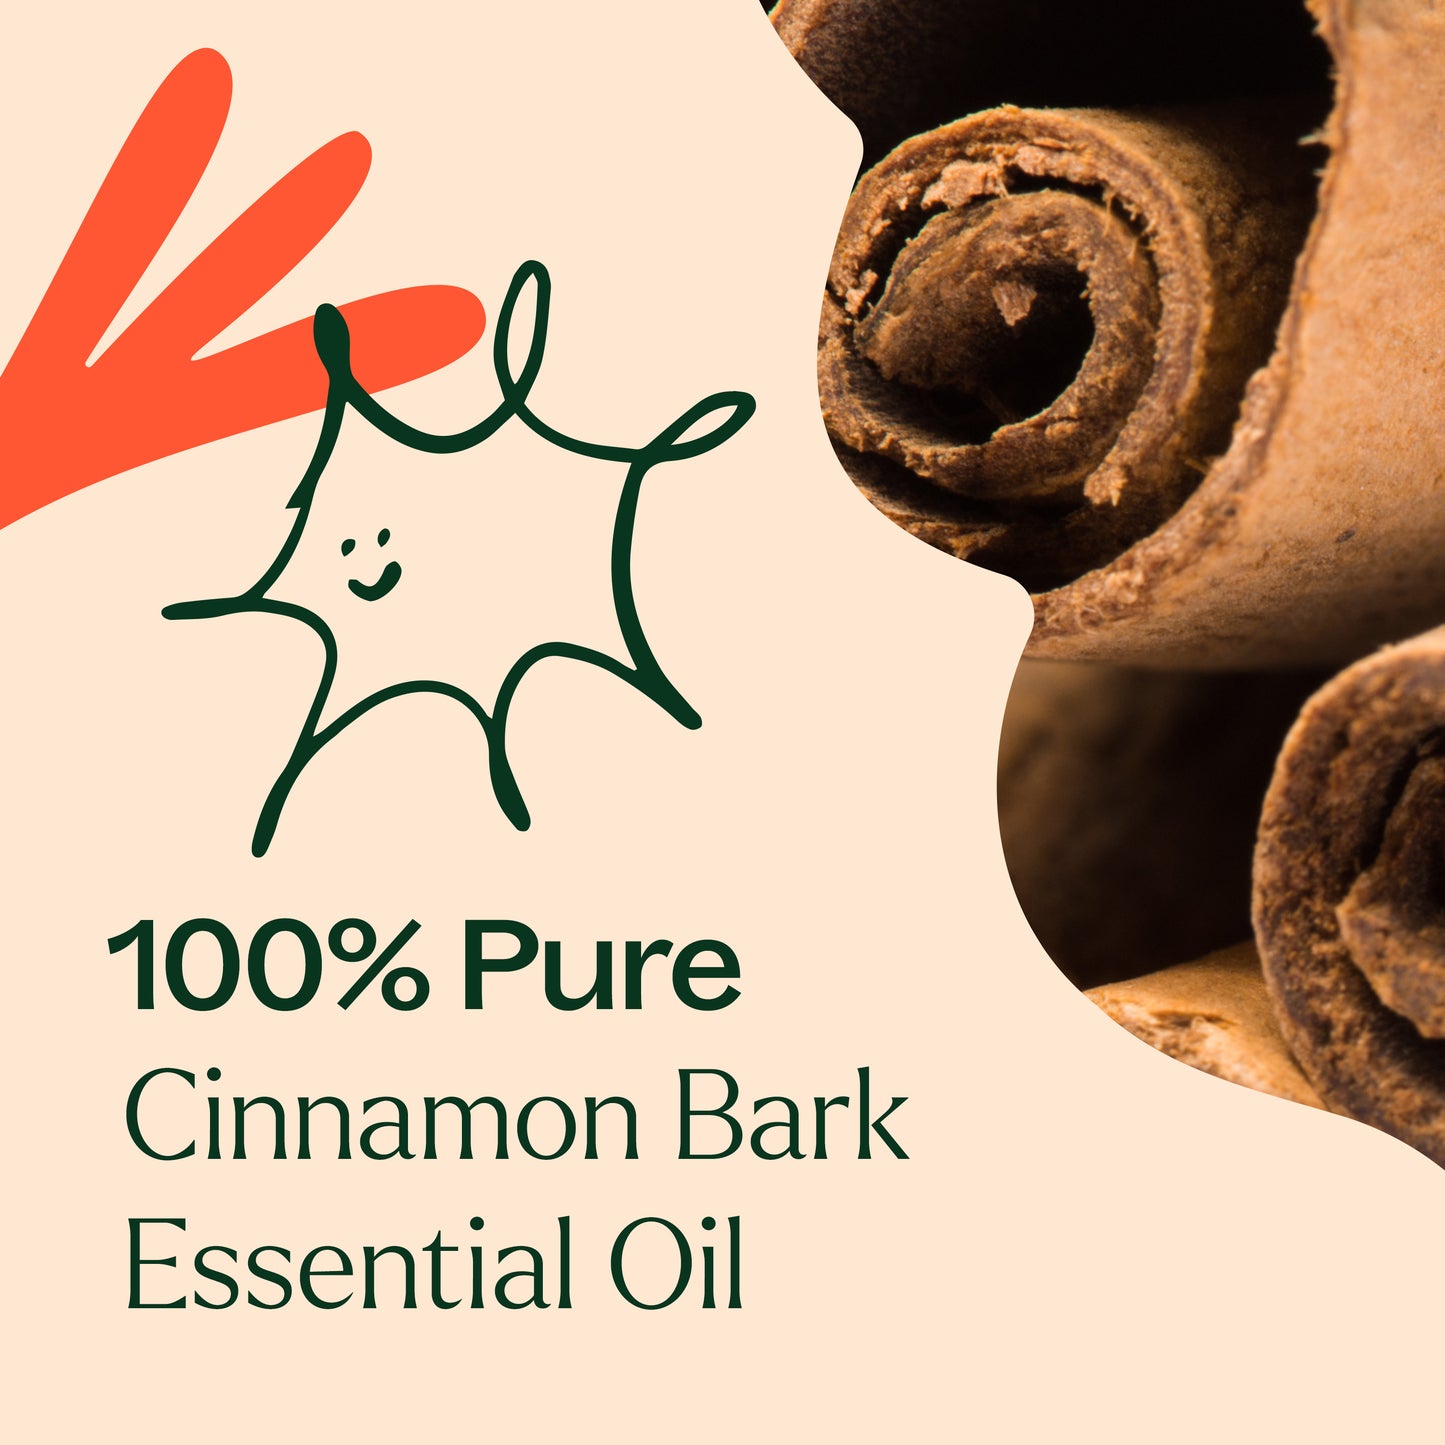 100% pure Cinnamon Bark Essential Oil